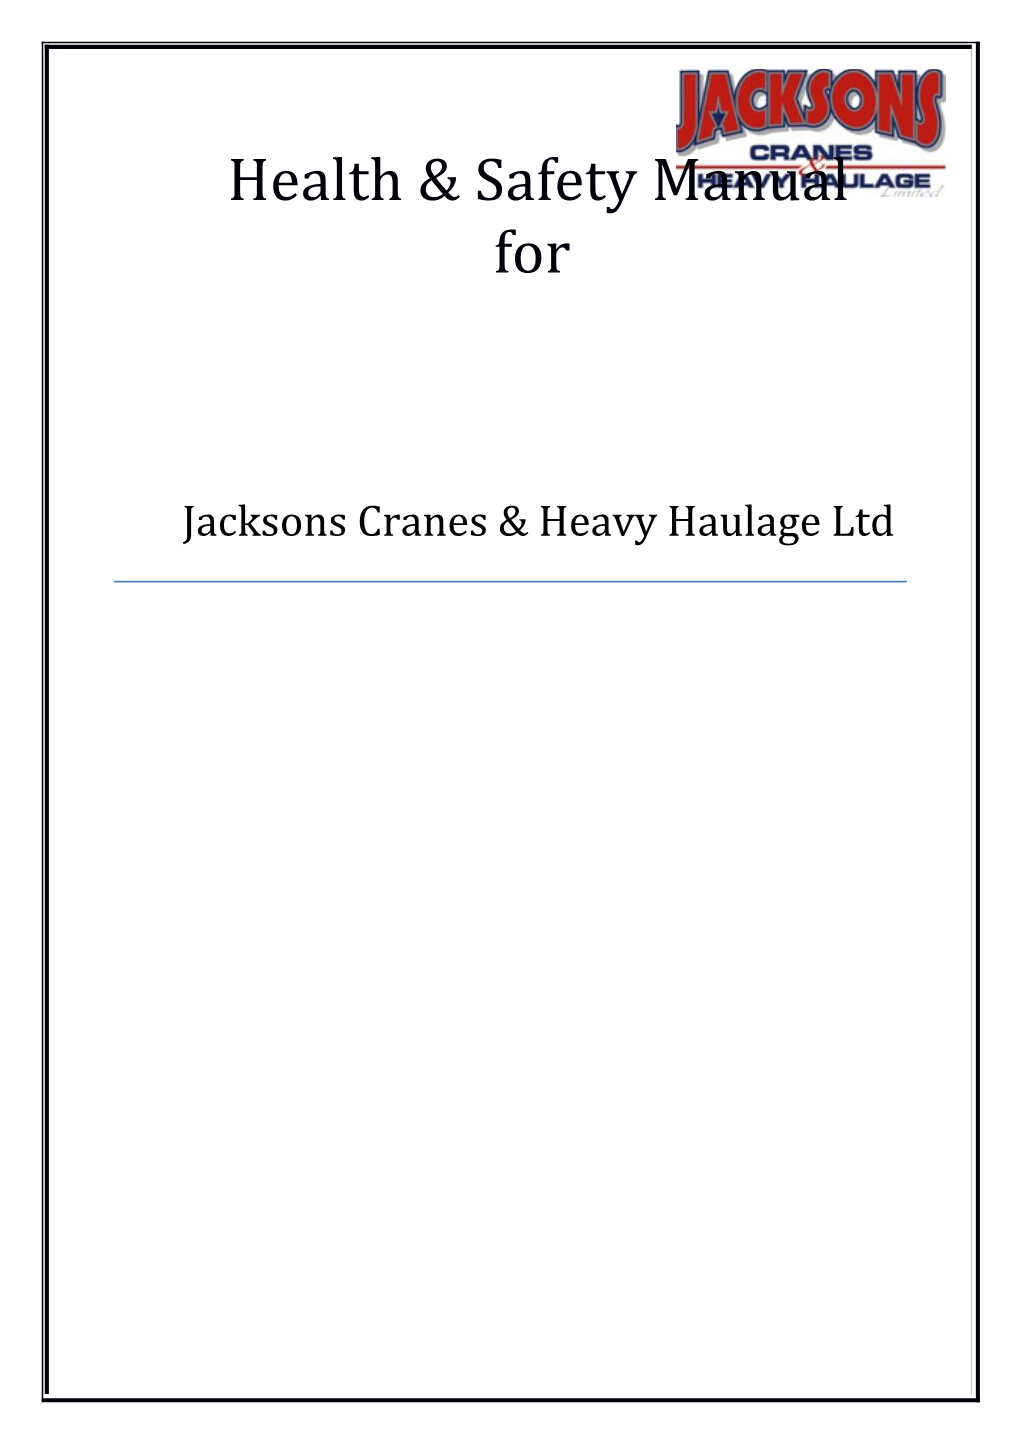 Jacksons Cranes & Heavy Haulage Ltd